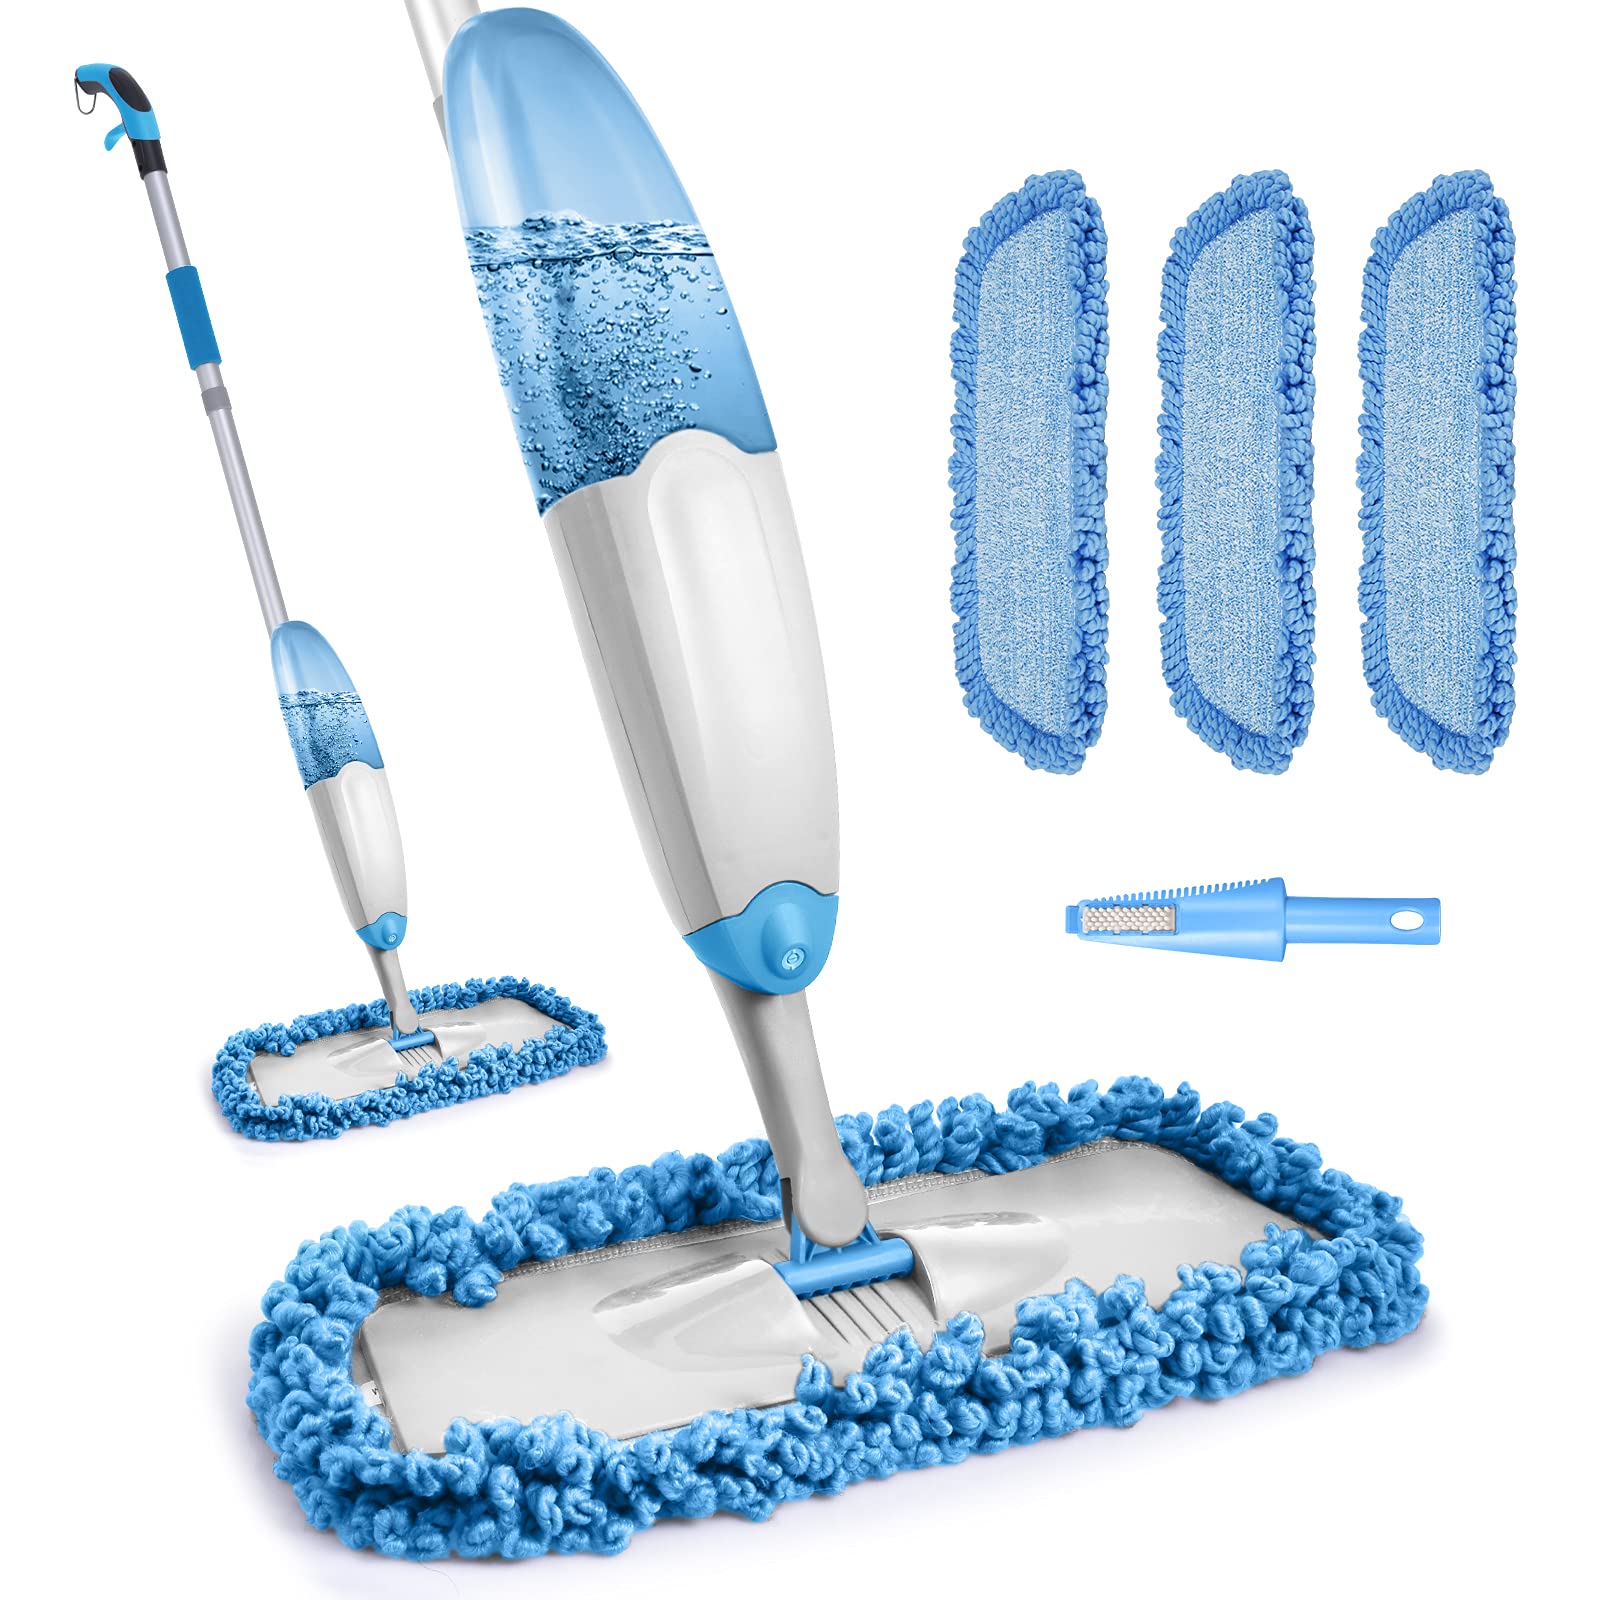 Microfiber Spritz n' Mop, Floor Spray Mop, Lola® Brand